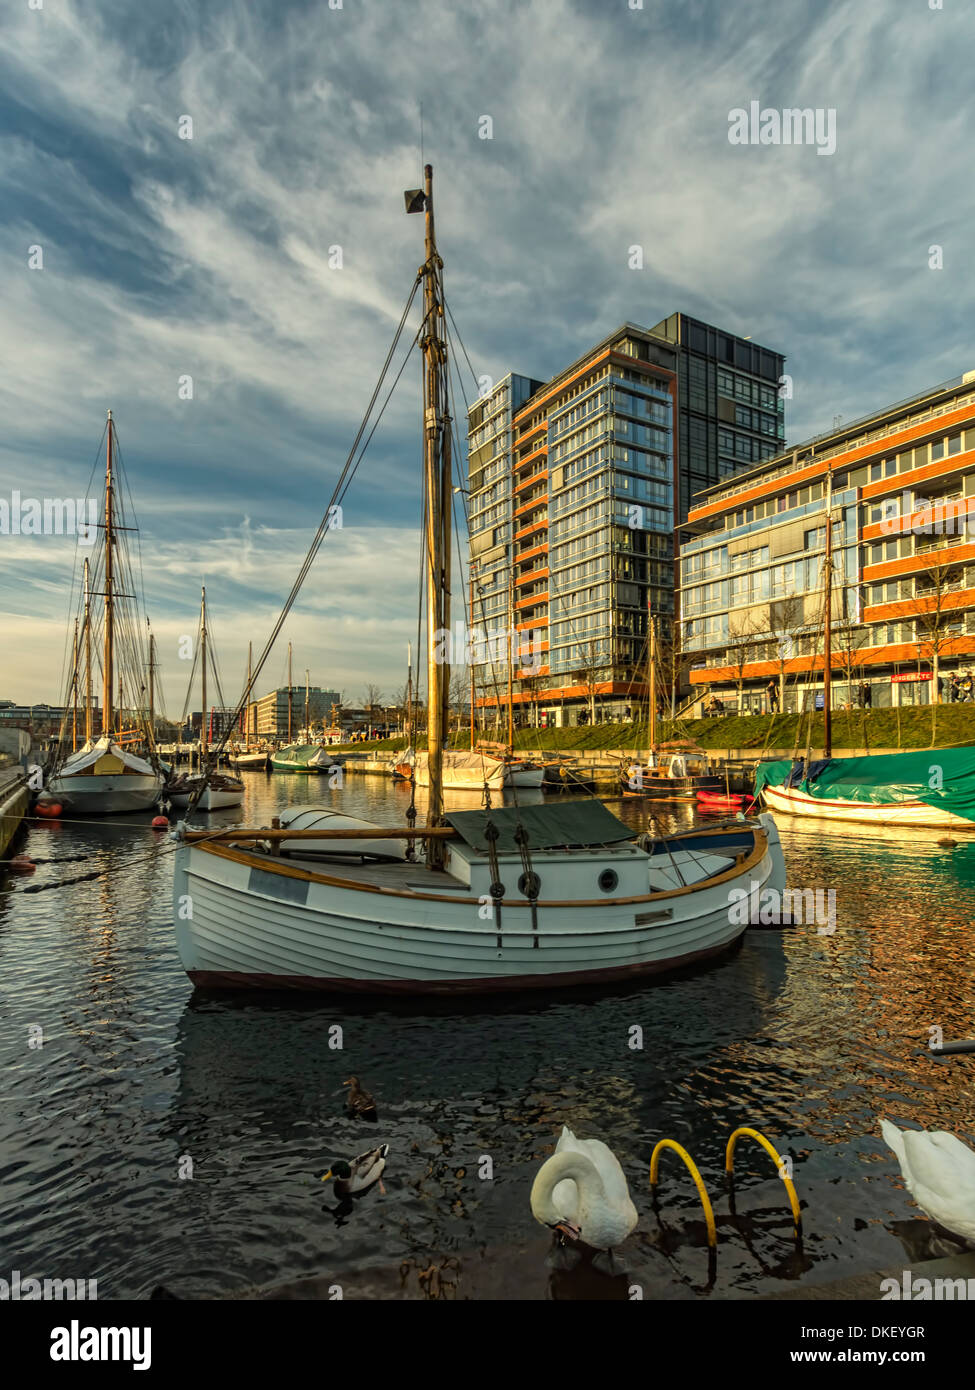 The harbor in Kiel, Ernst Busch platz, Germany Stock Photo